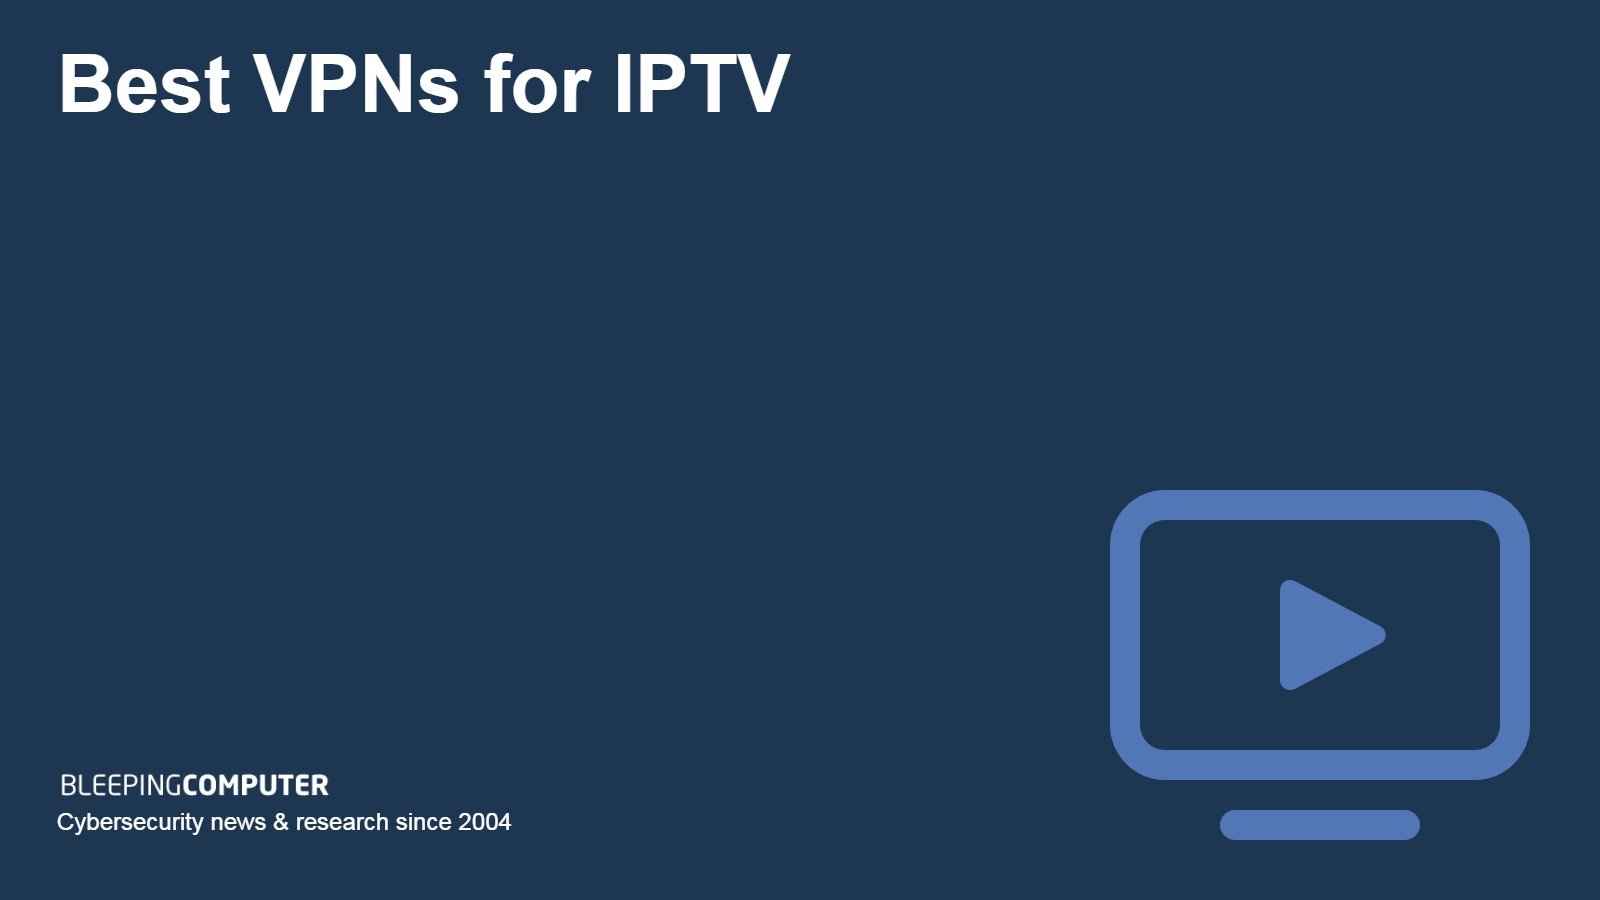 OneTV Services - The Best IPTV Service Provider